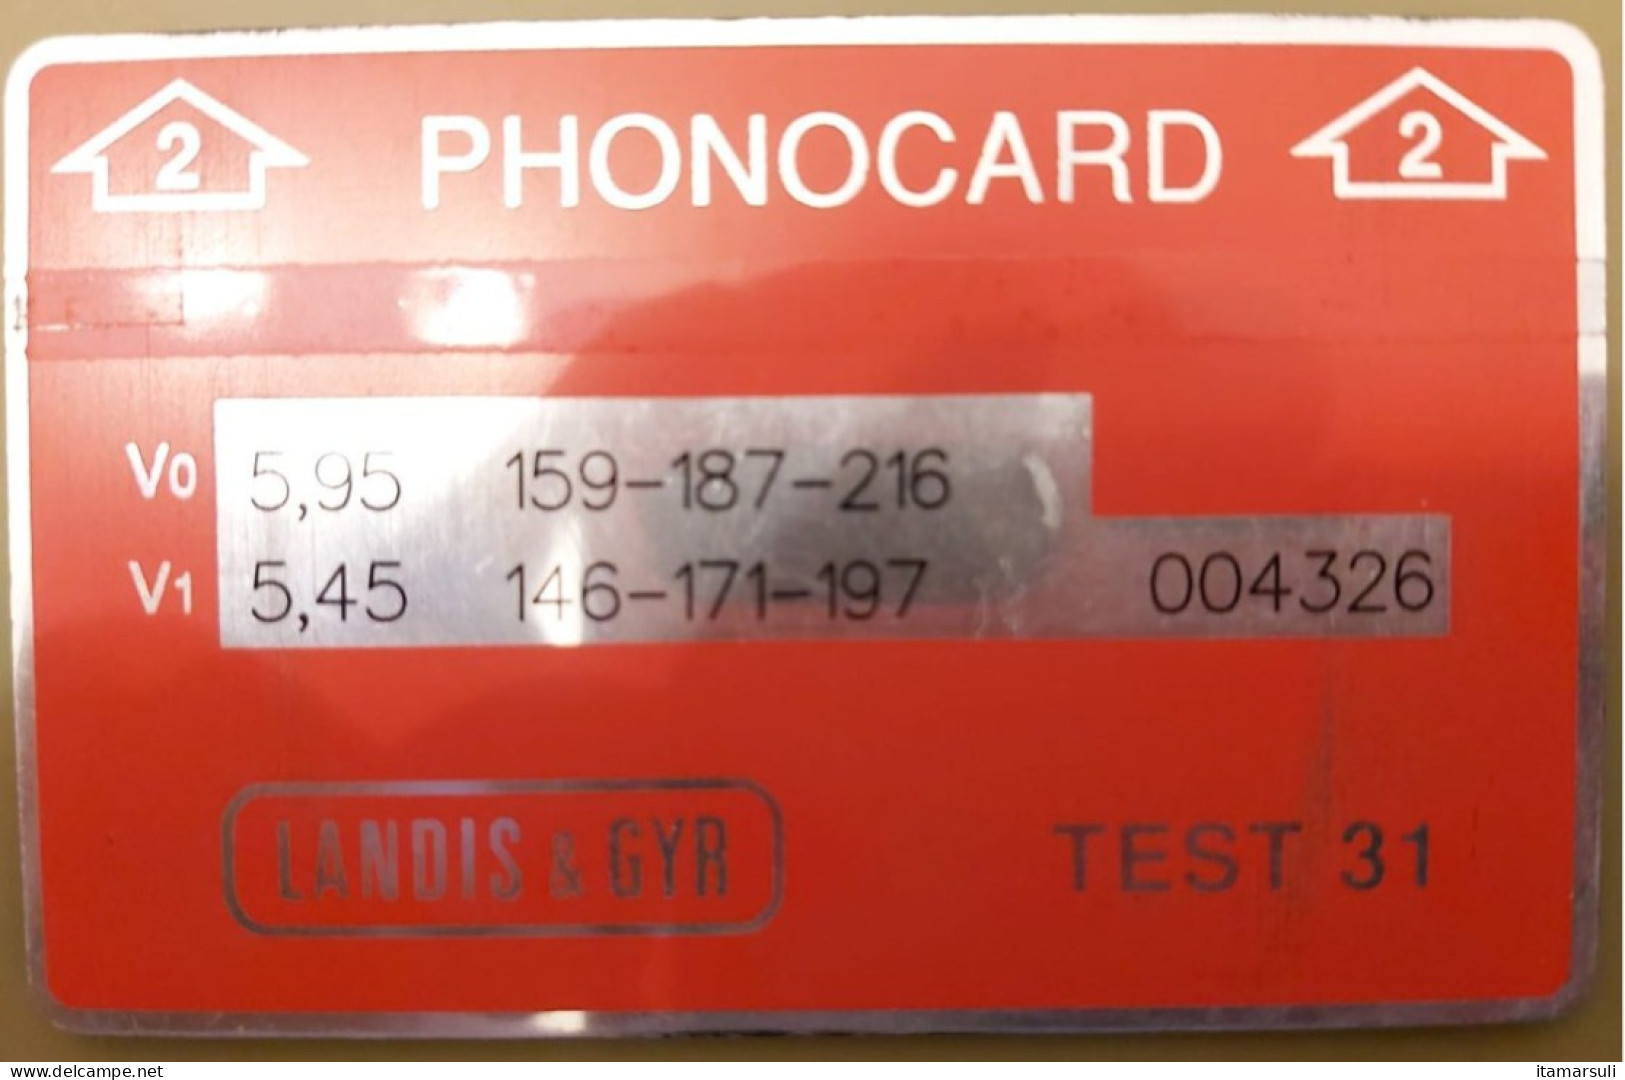 ISRAEL - Bezeq L&G Test Card Struc 2, Red With Silver Frame, 004326, BZ-24 - Israël